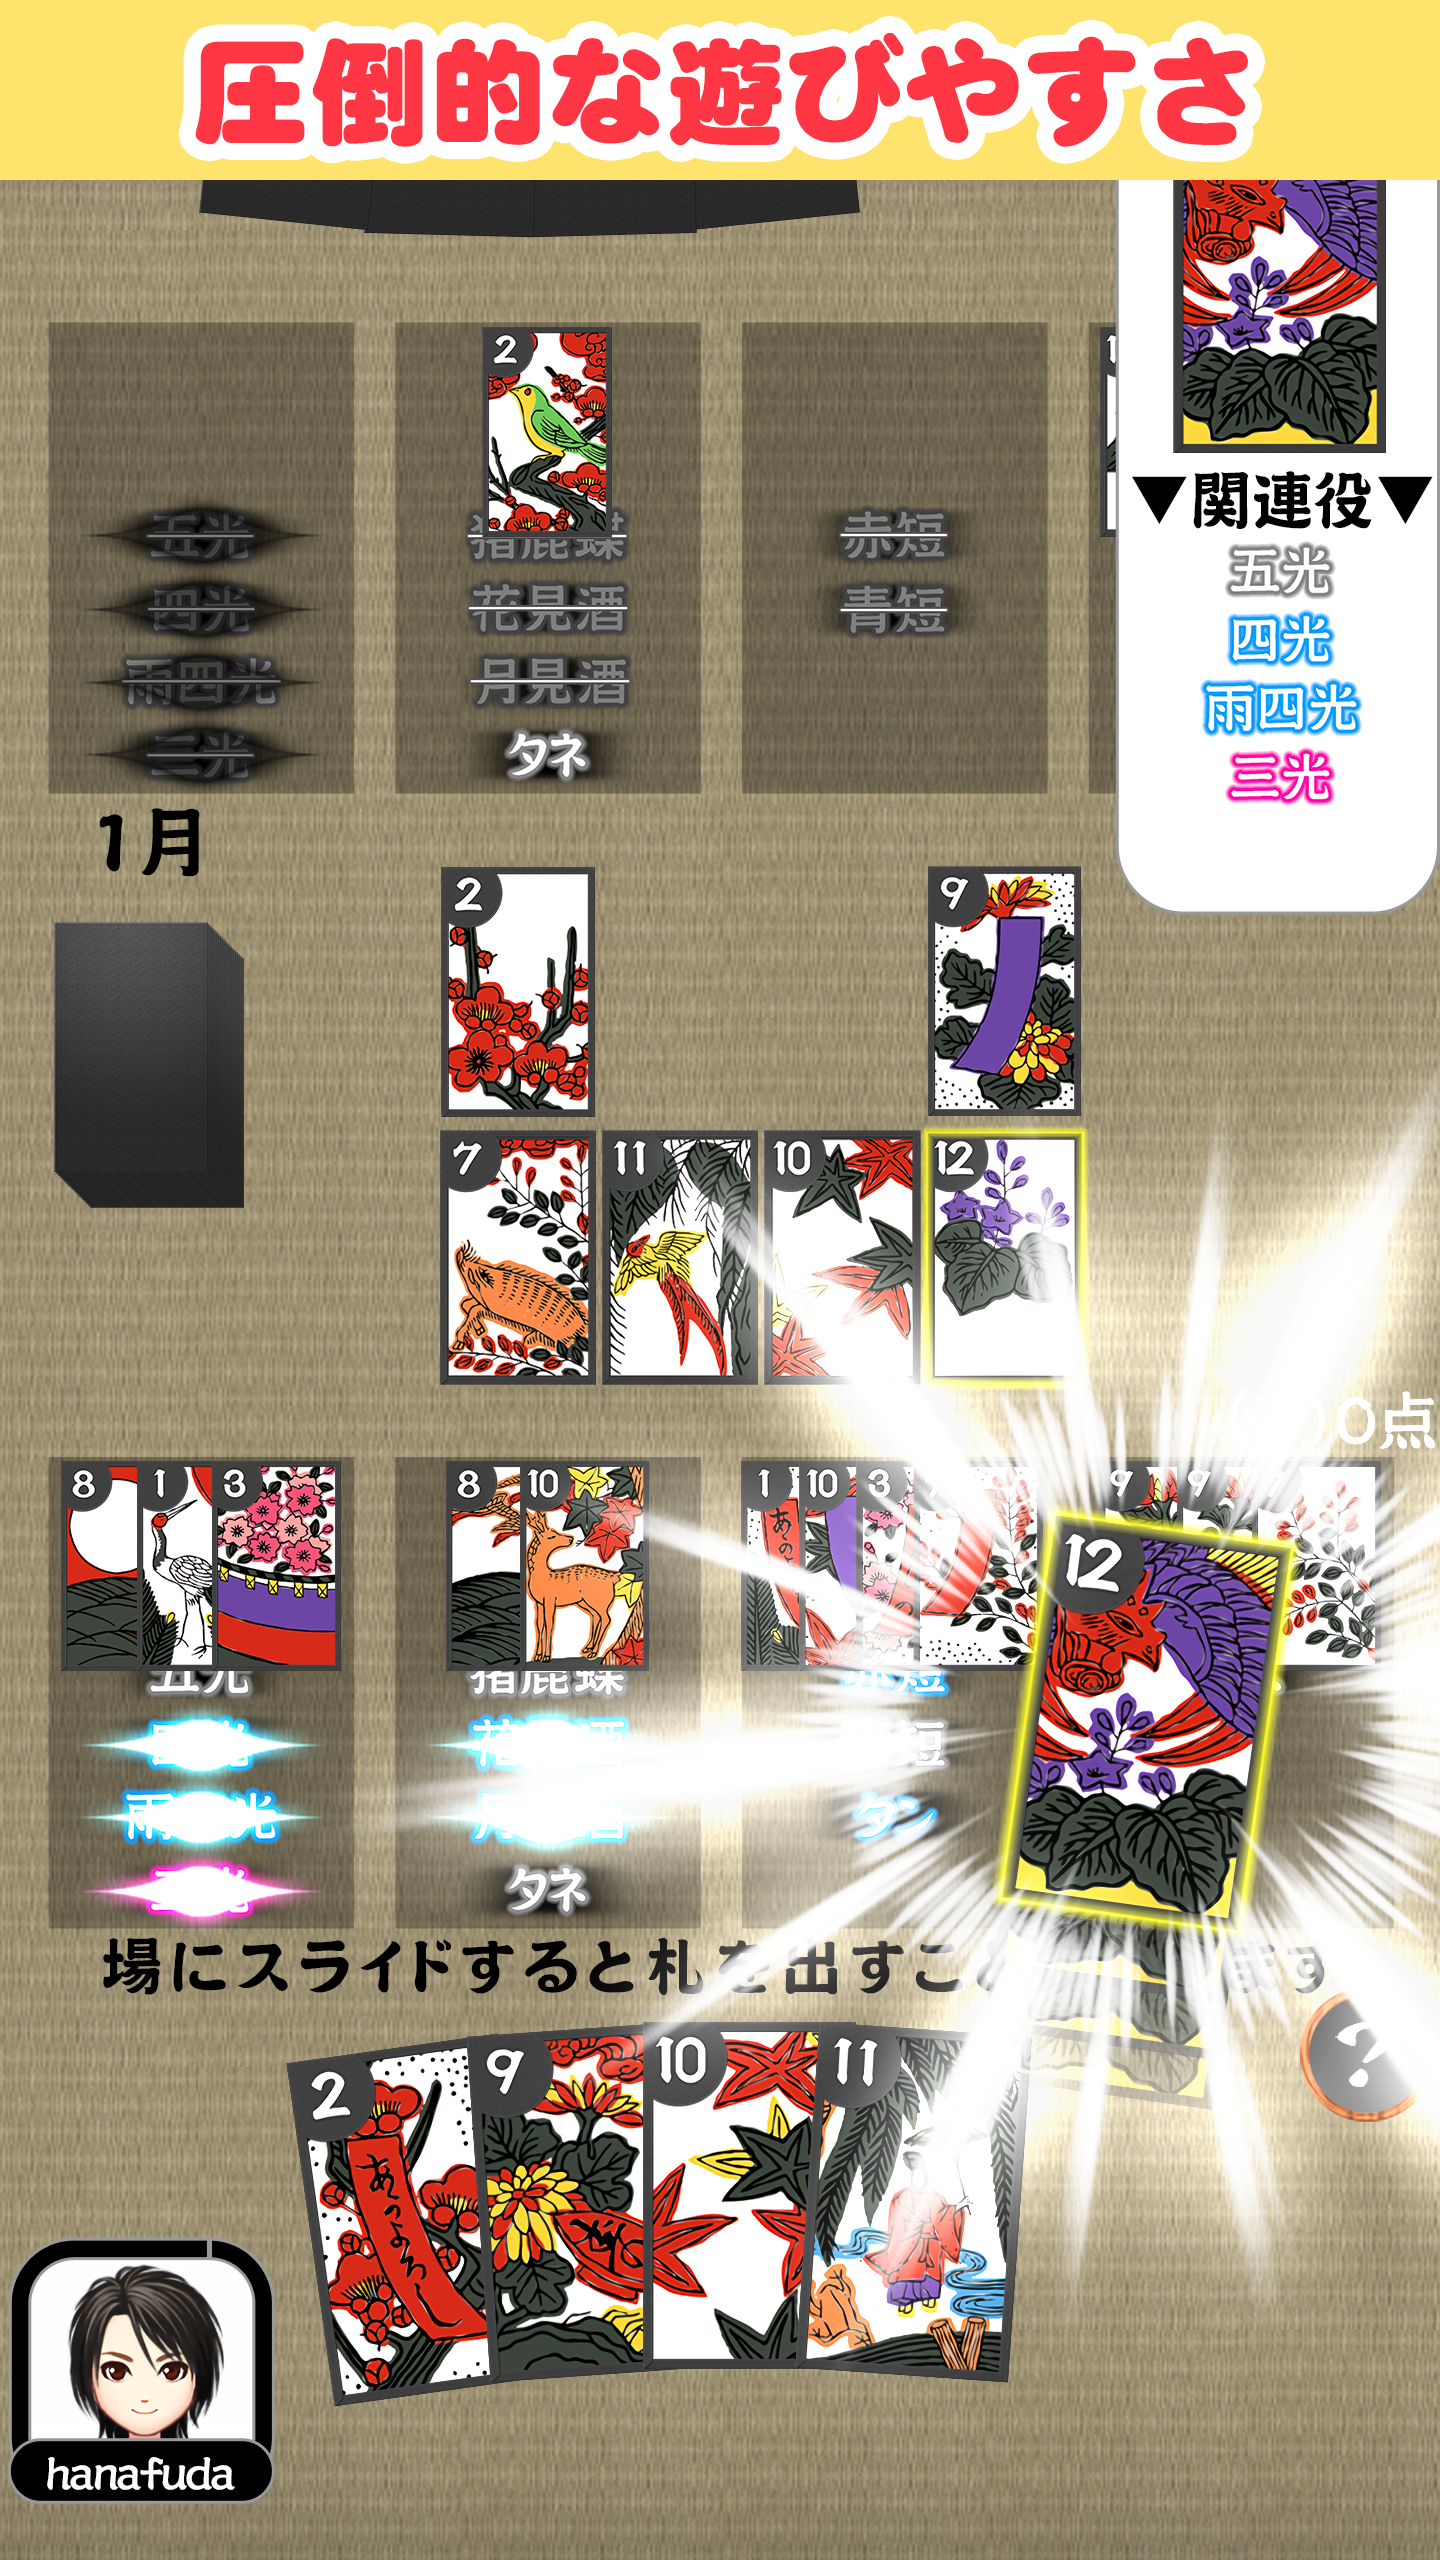 Screenshot 1 of Hanafuda លើបណ្តាញ 4.9.5